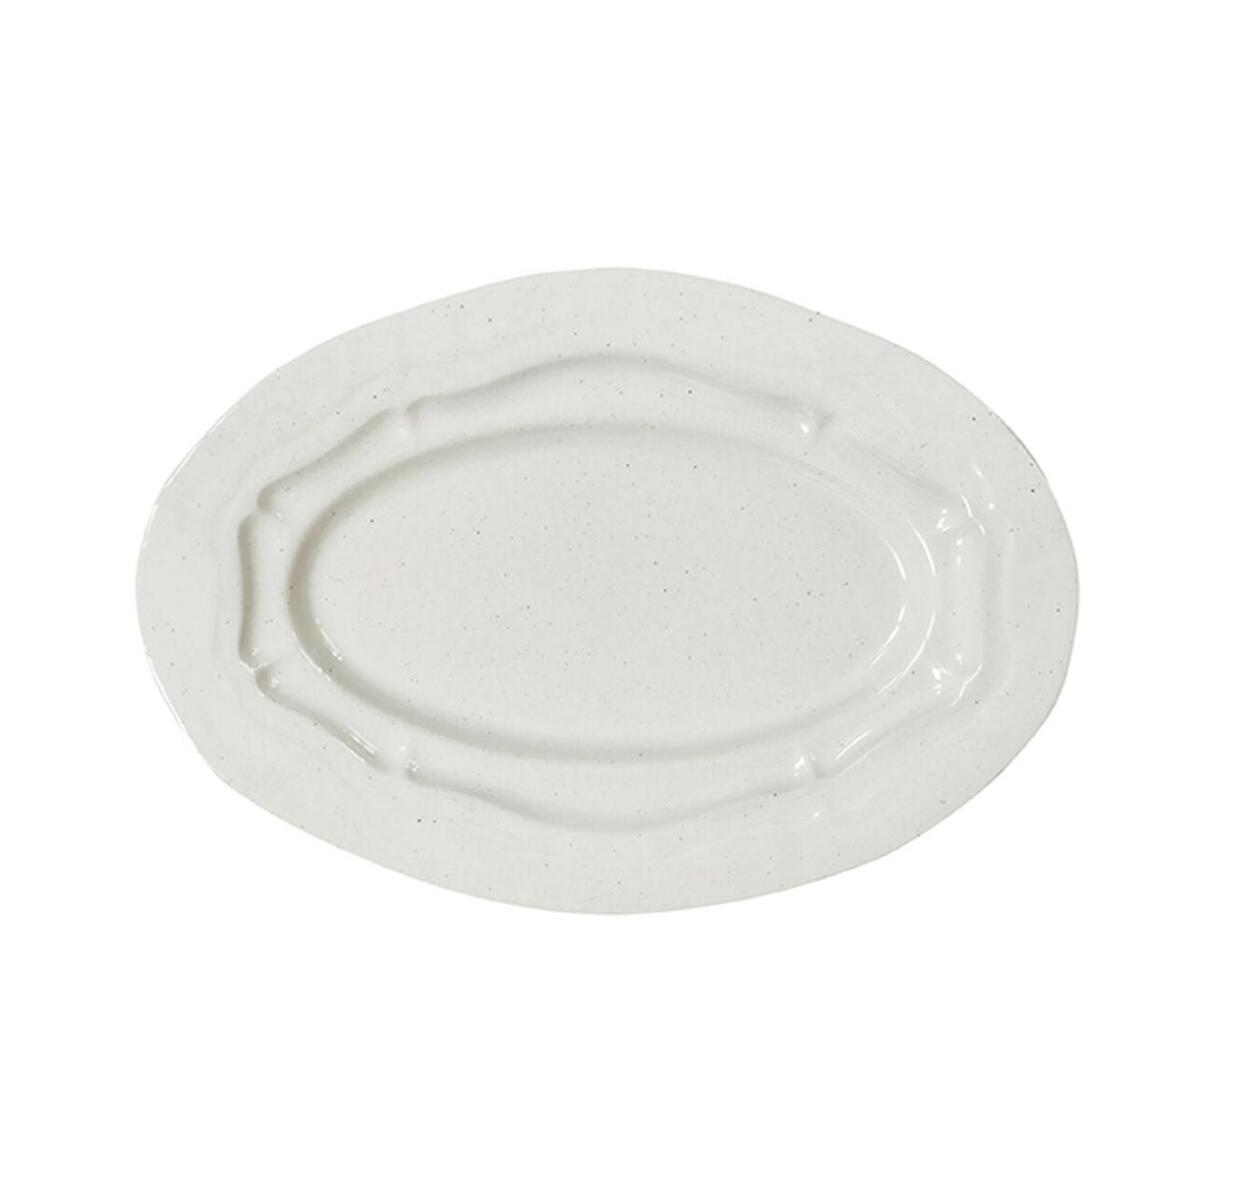 oval dish m refectoire sable brillant ceramic manufacturer